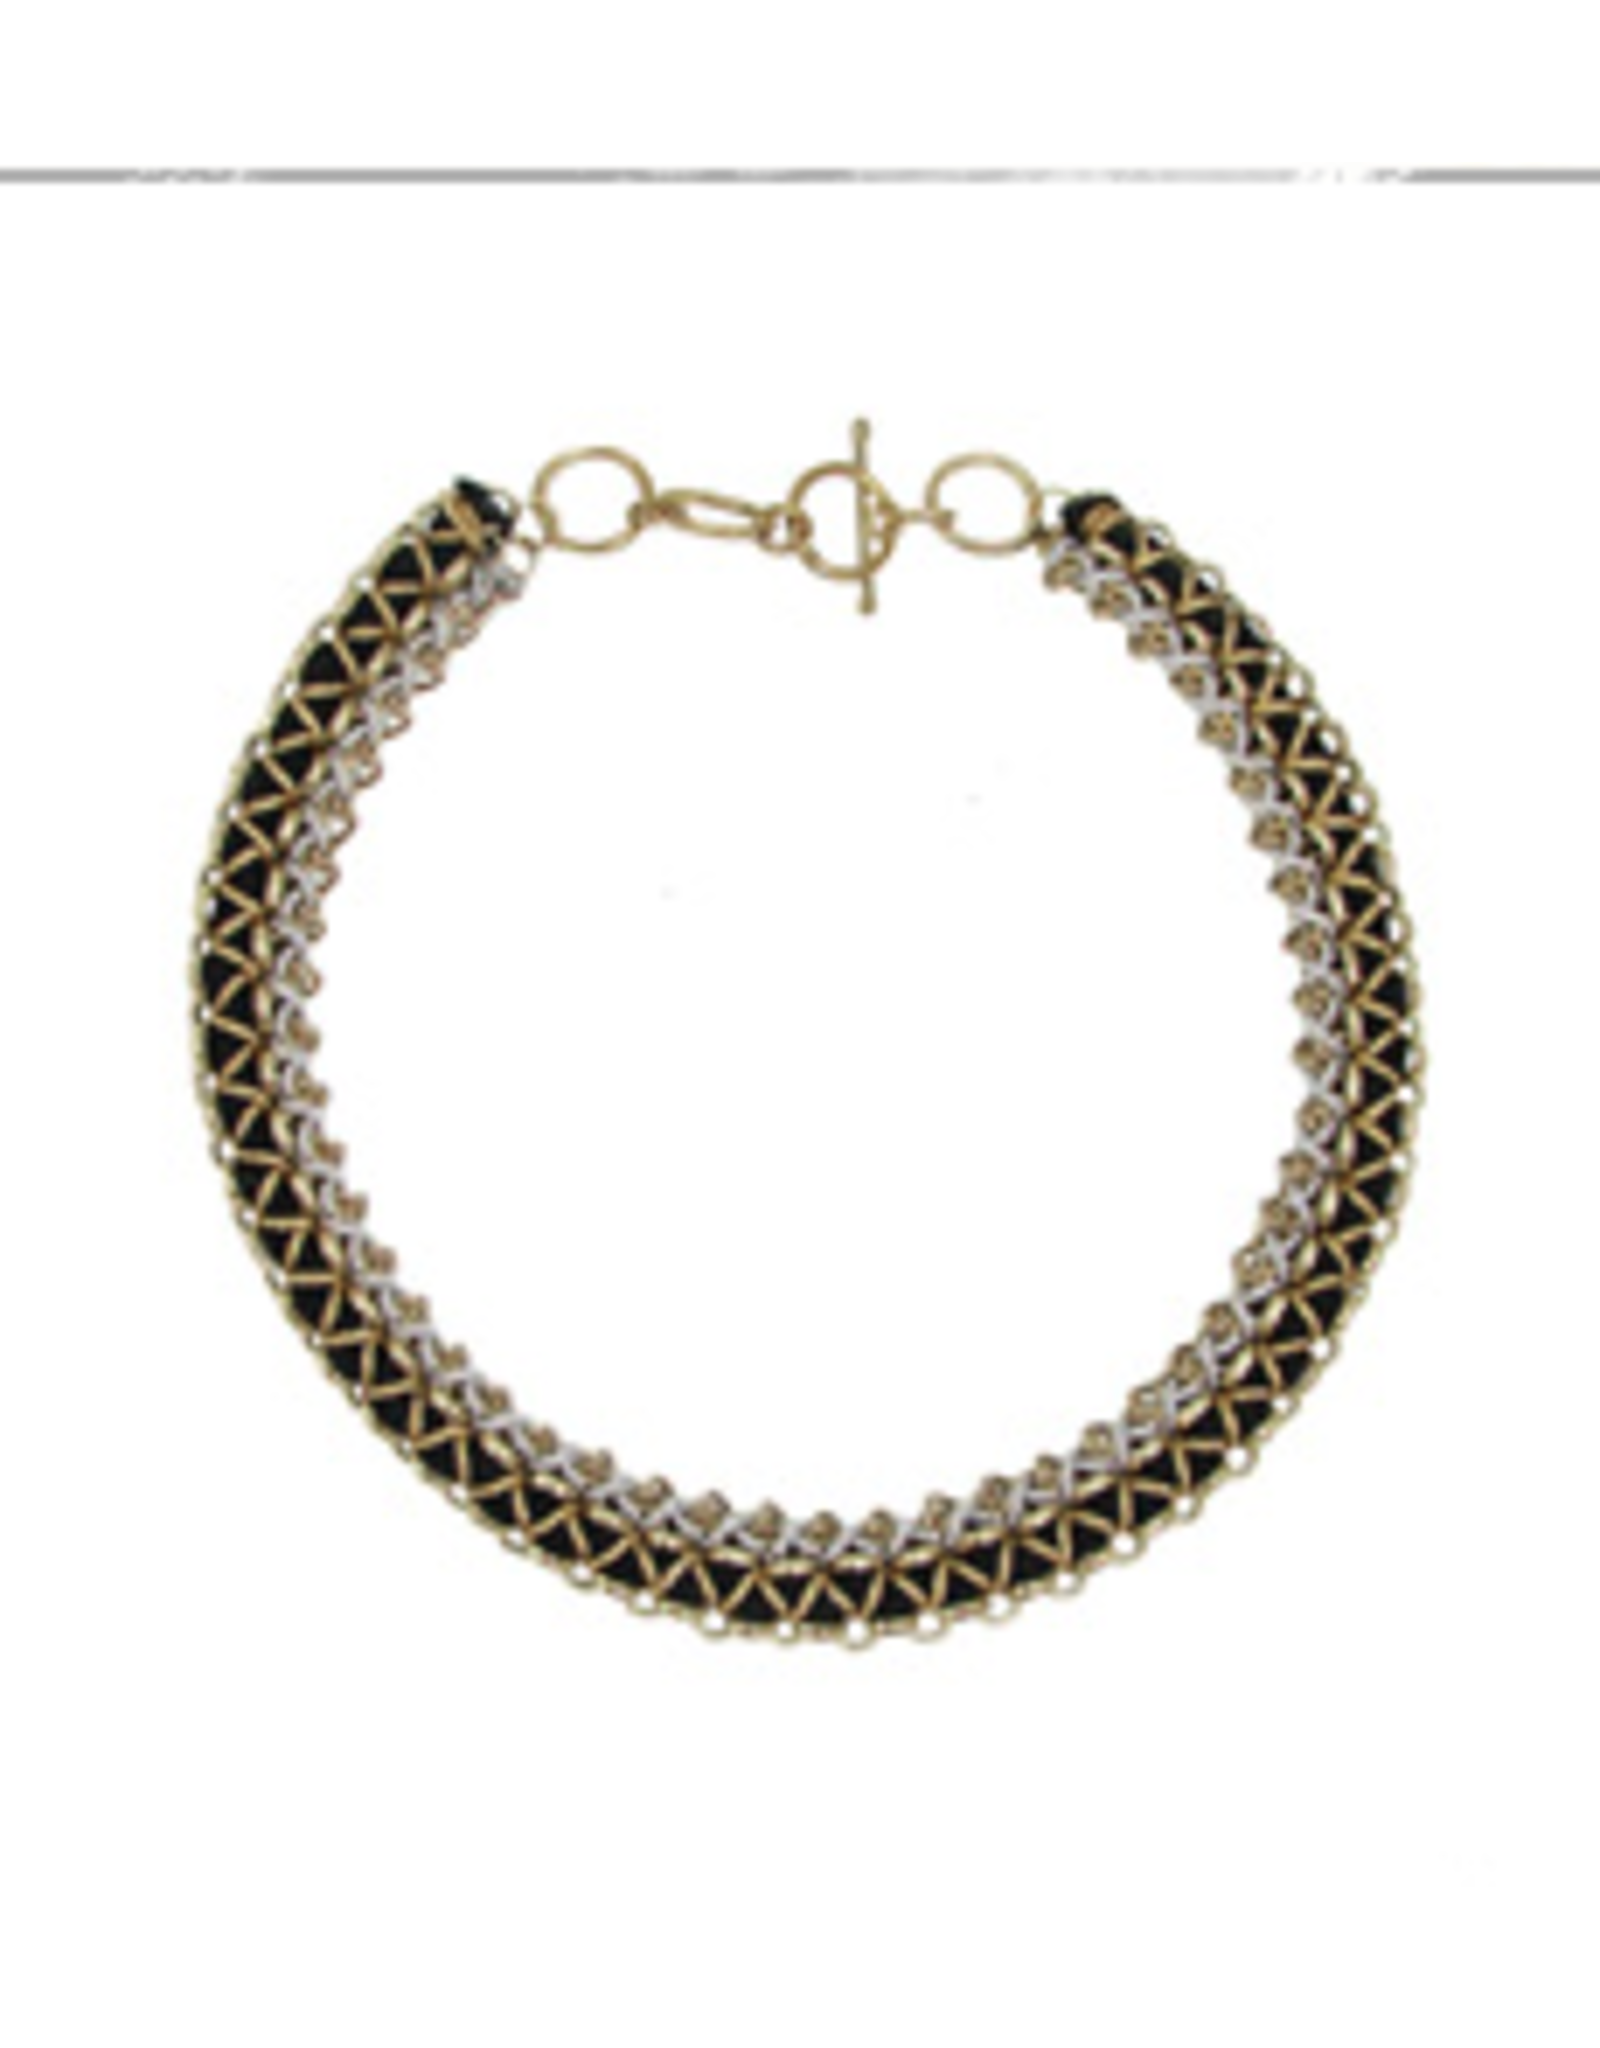 Trade roots Woven Metallic Necklace/Bracelet